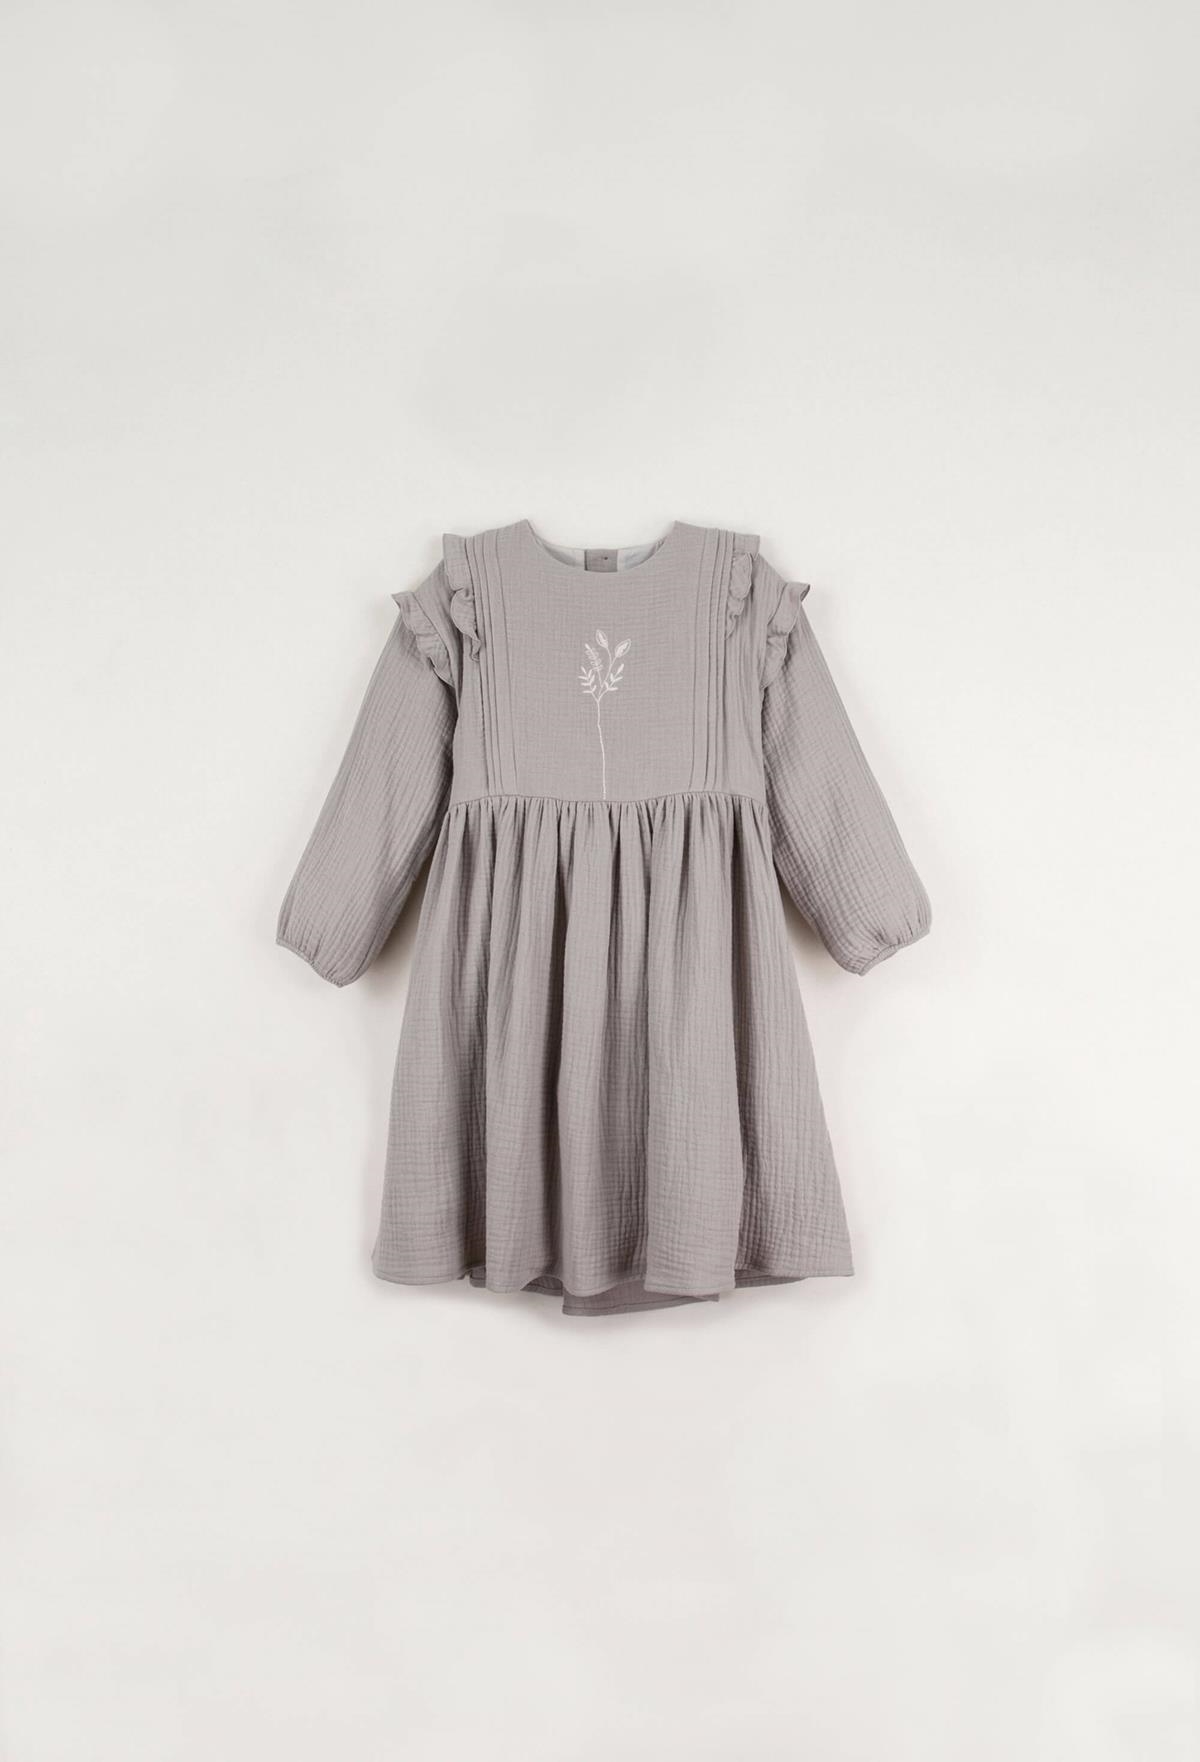 Mod.32.1 Taupe embroidered dress with pintucks | AW22.23 Mod.32.1 Taupe embroidered dress with pintucks